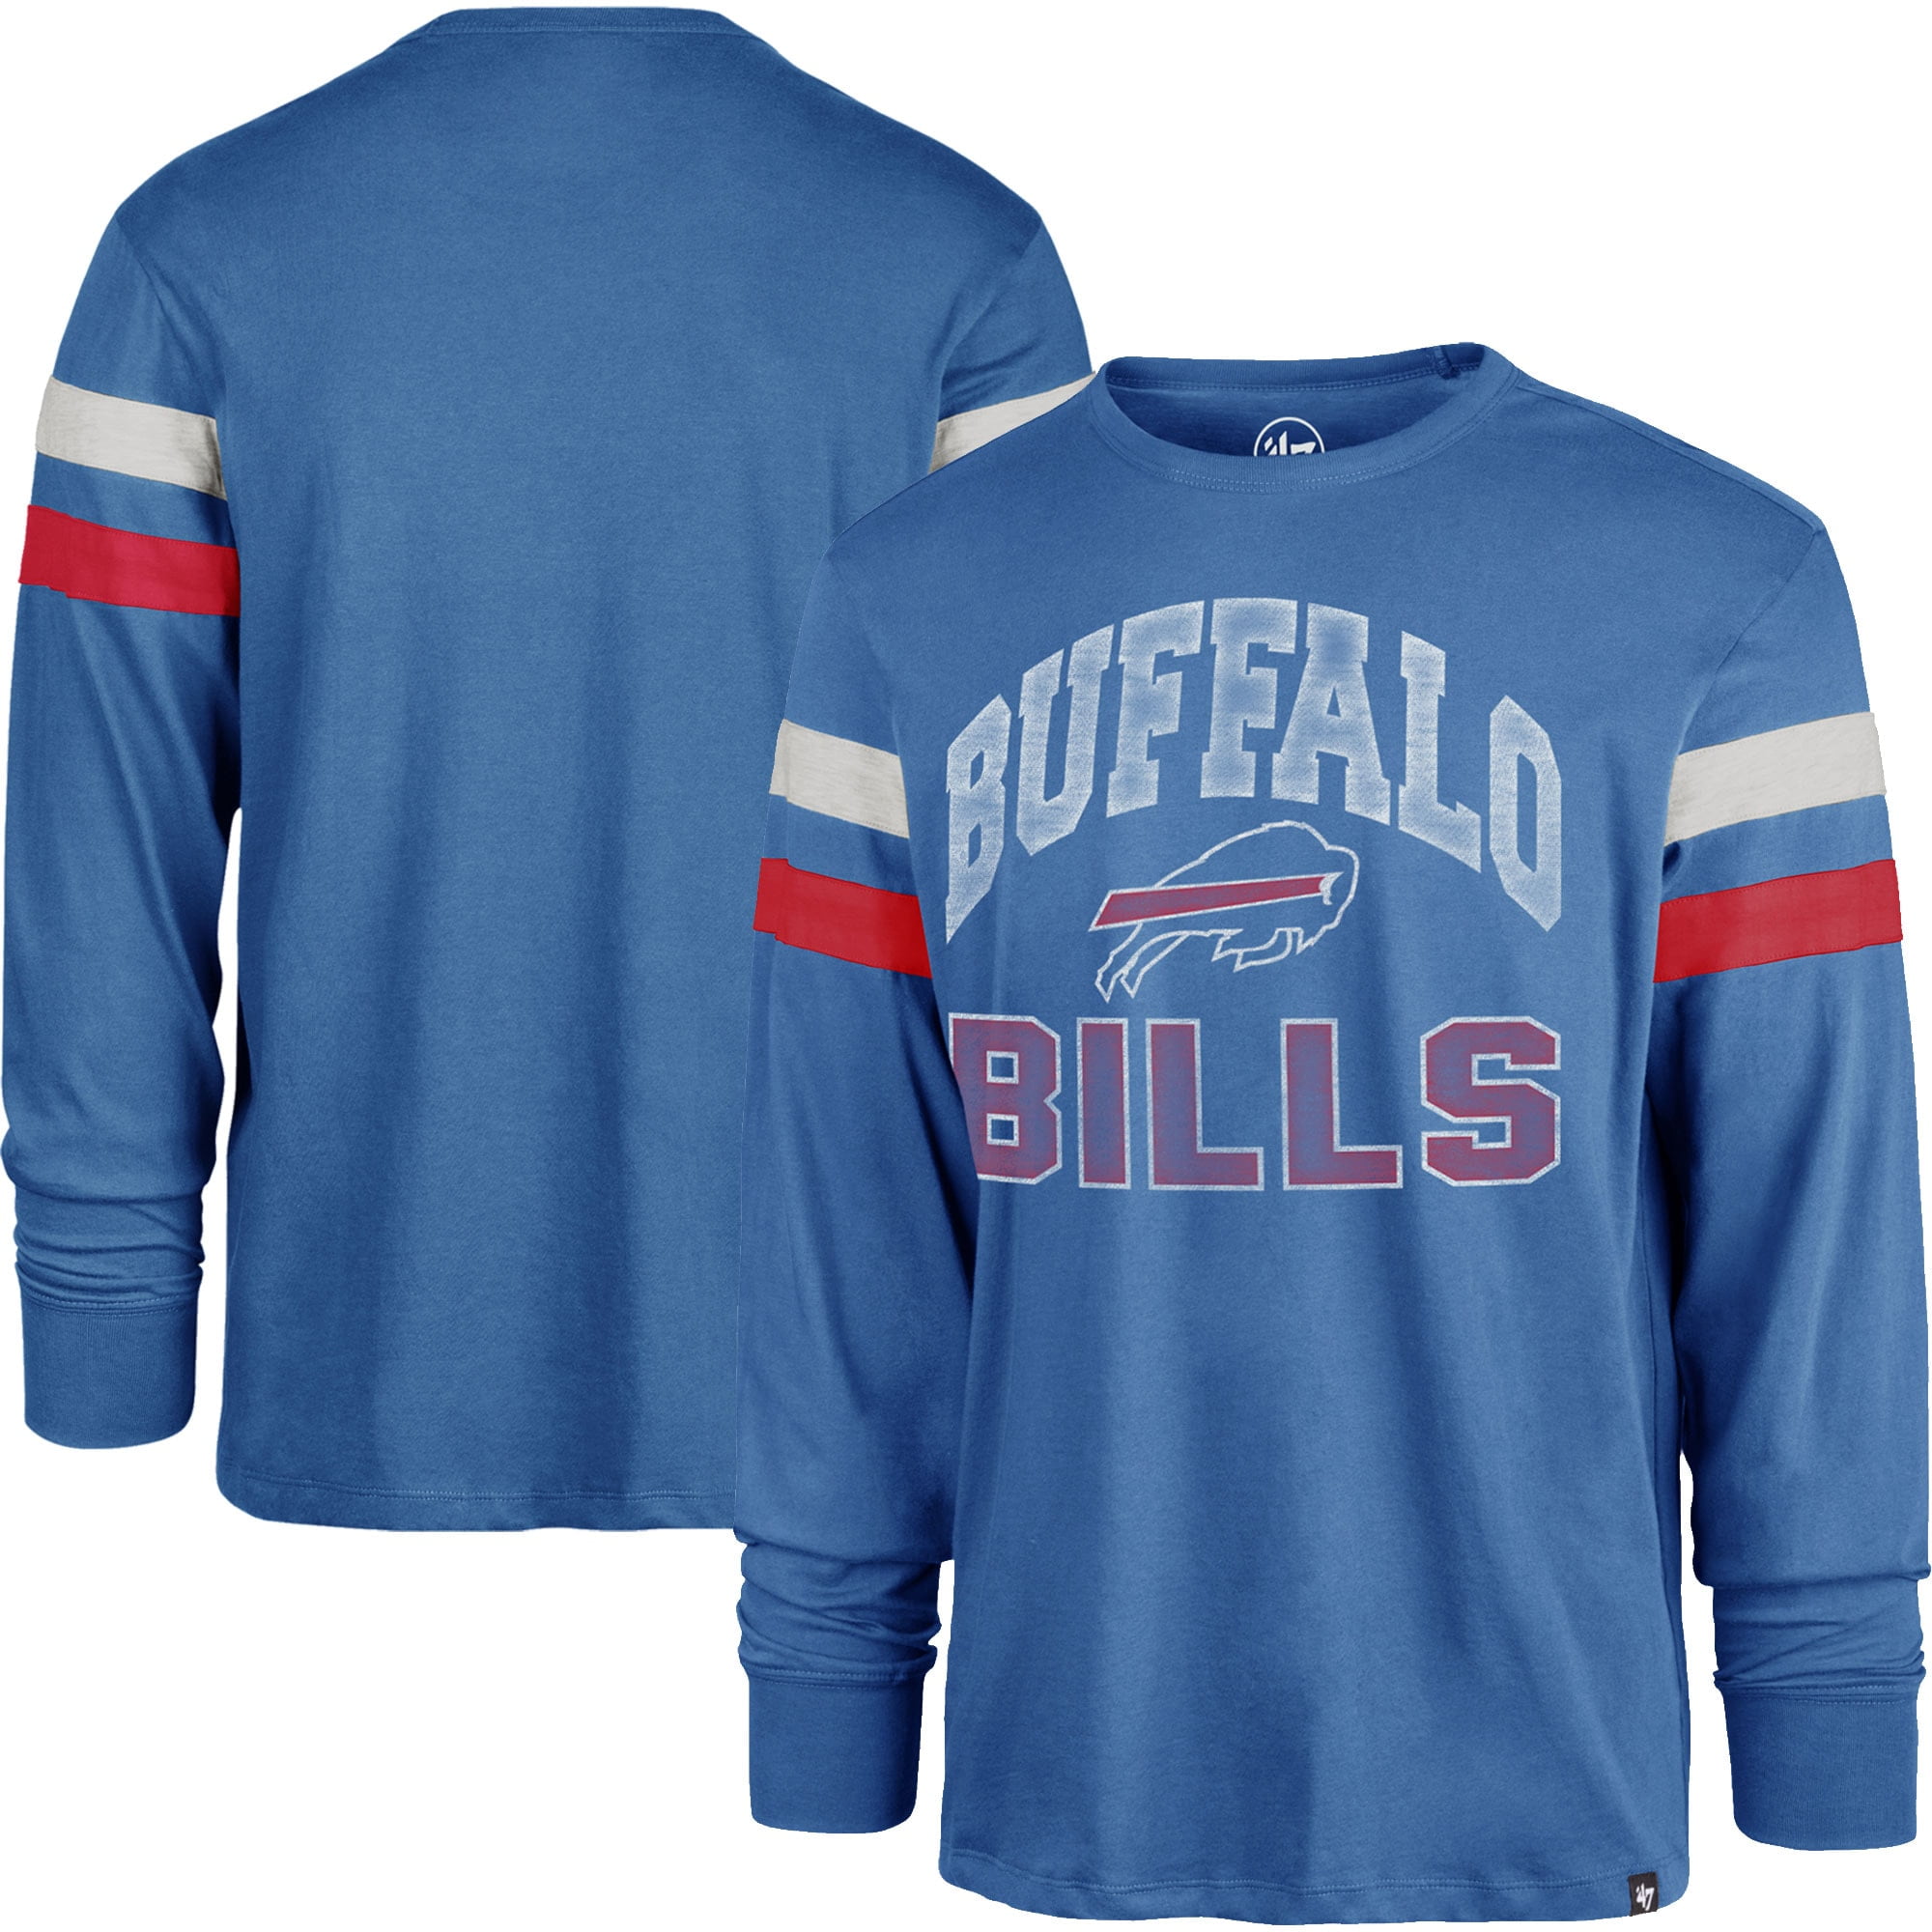 buffalo bills long sleeve jersey